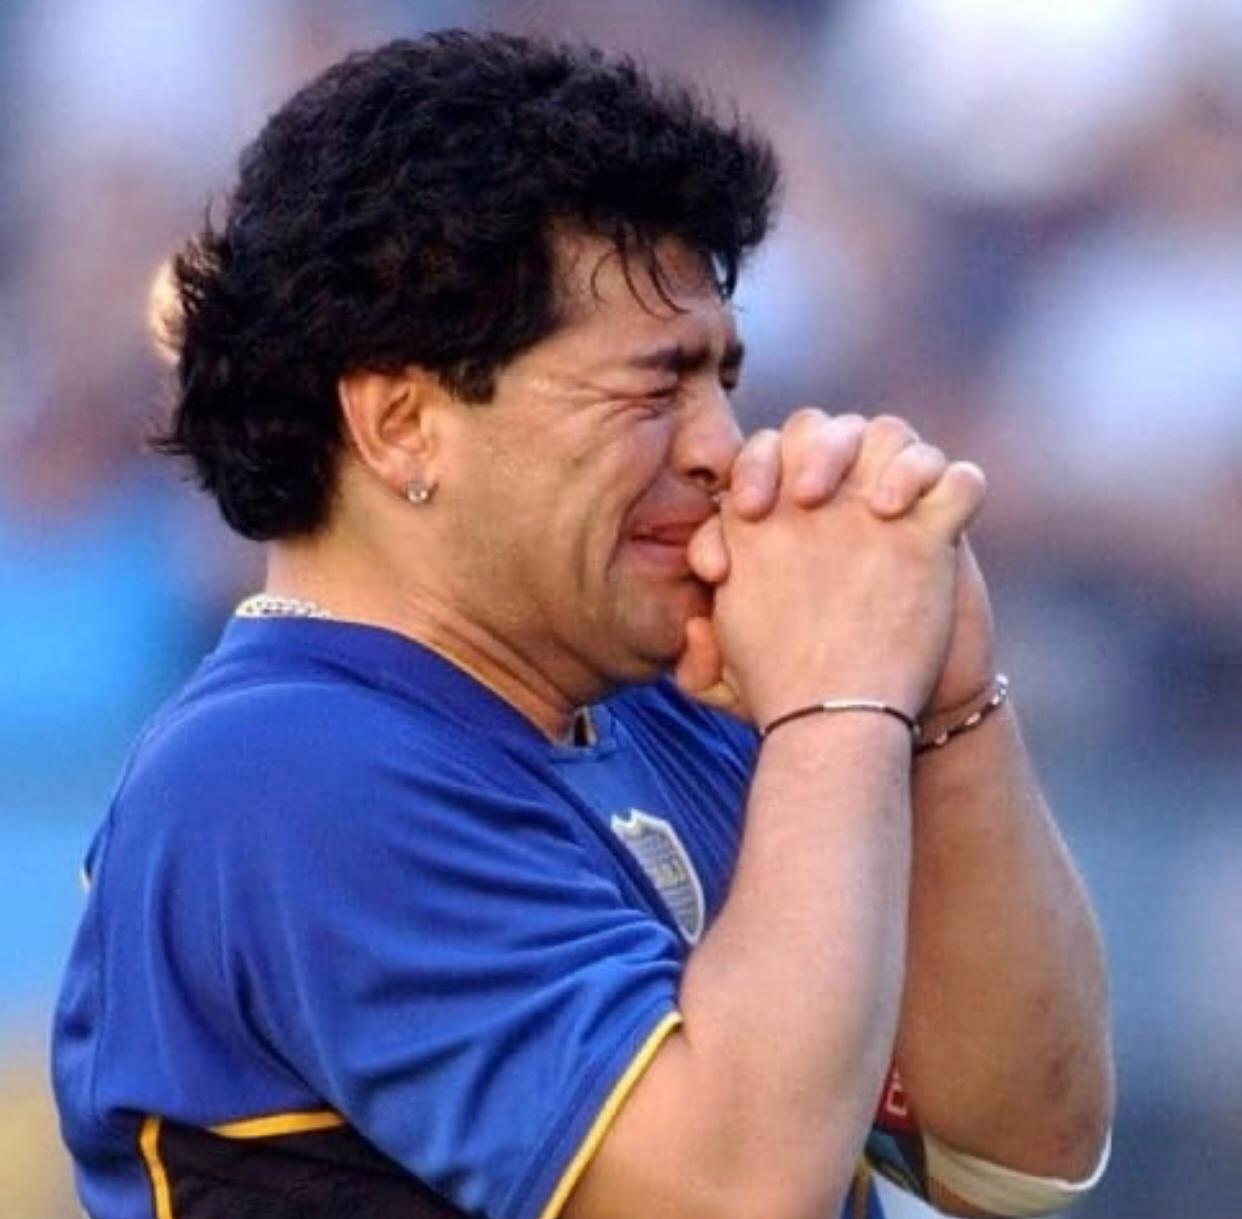 Murió el exfutbolista argentino Diego Armando Maradona